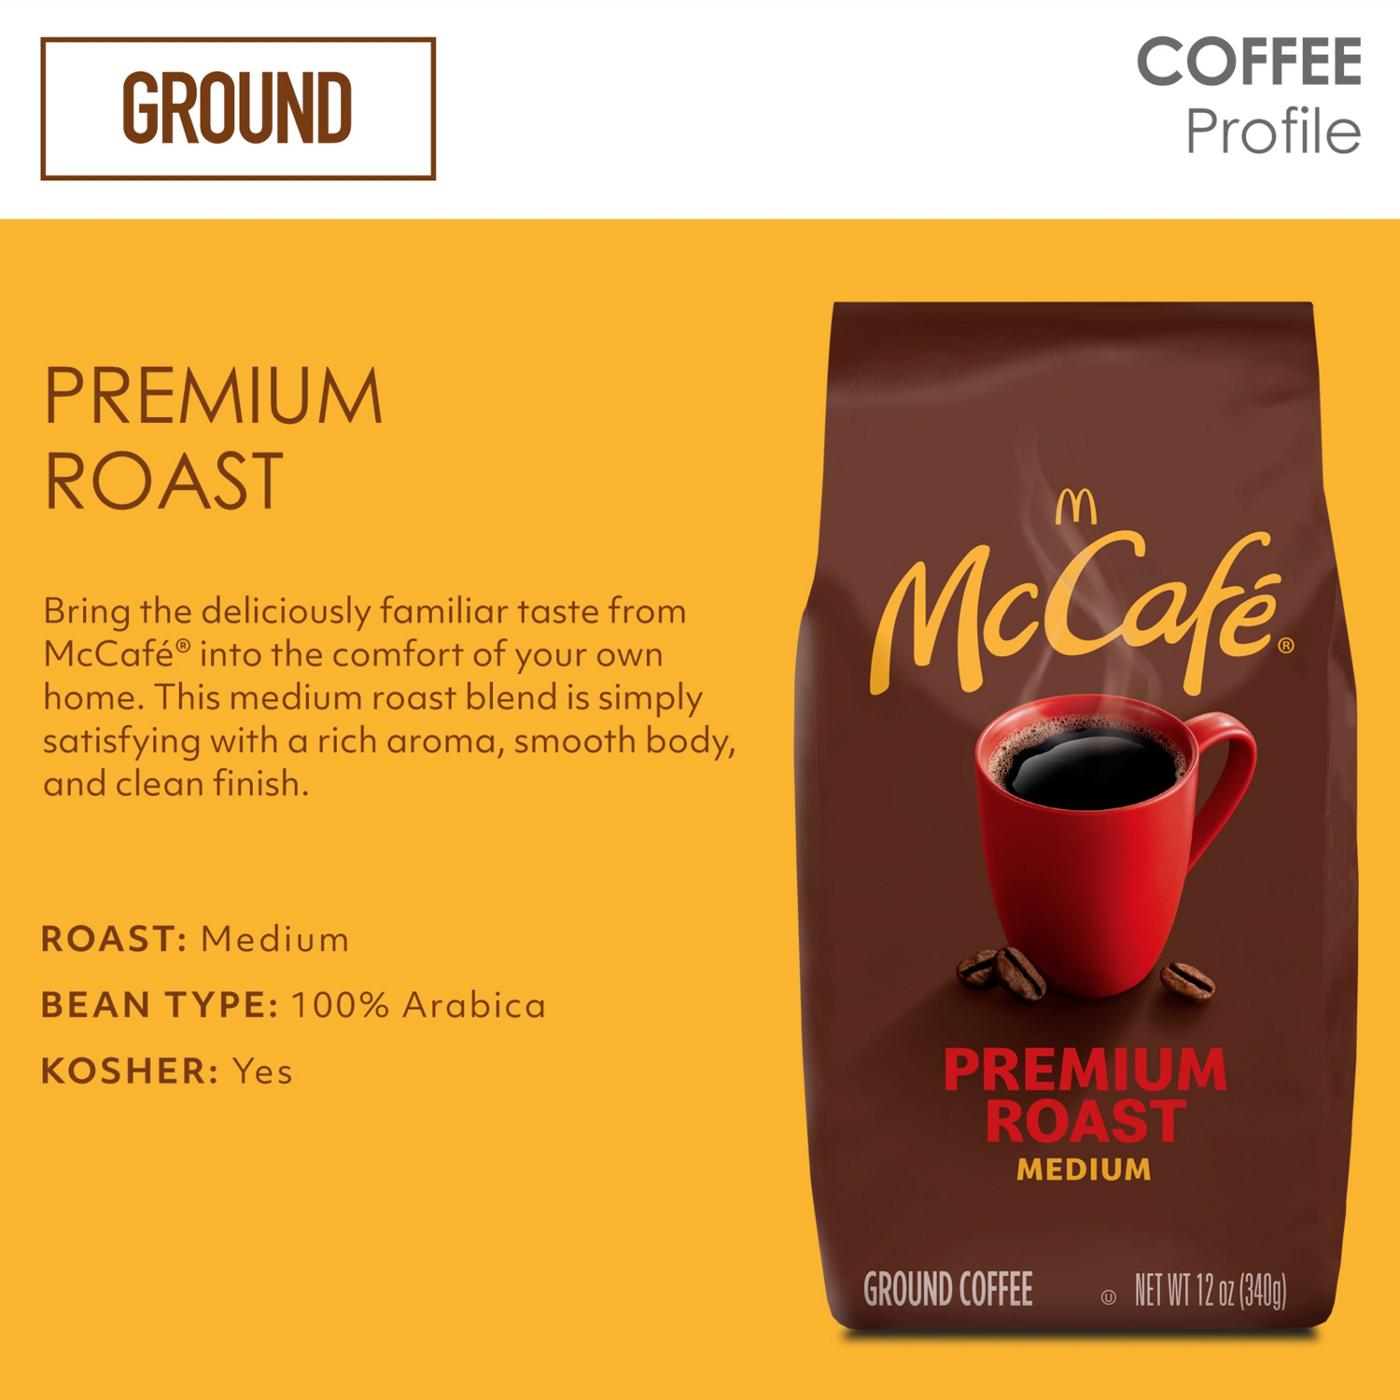 McCafe Premium Roast Medium Ground Coffee; image 2 of 7